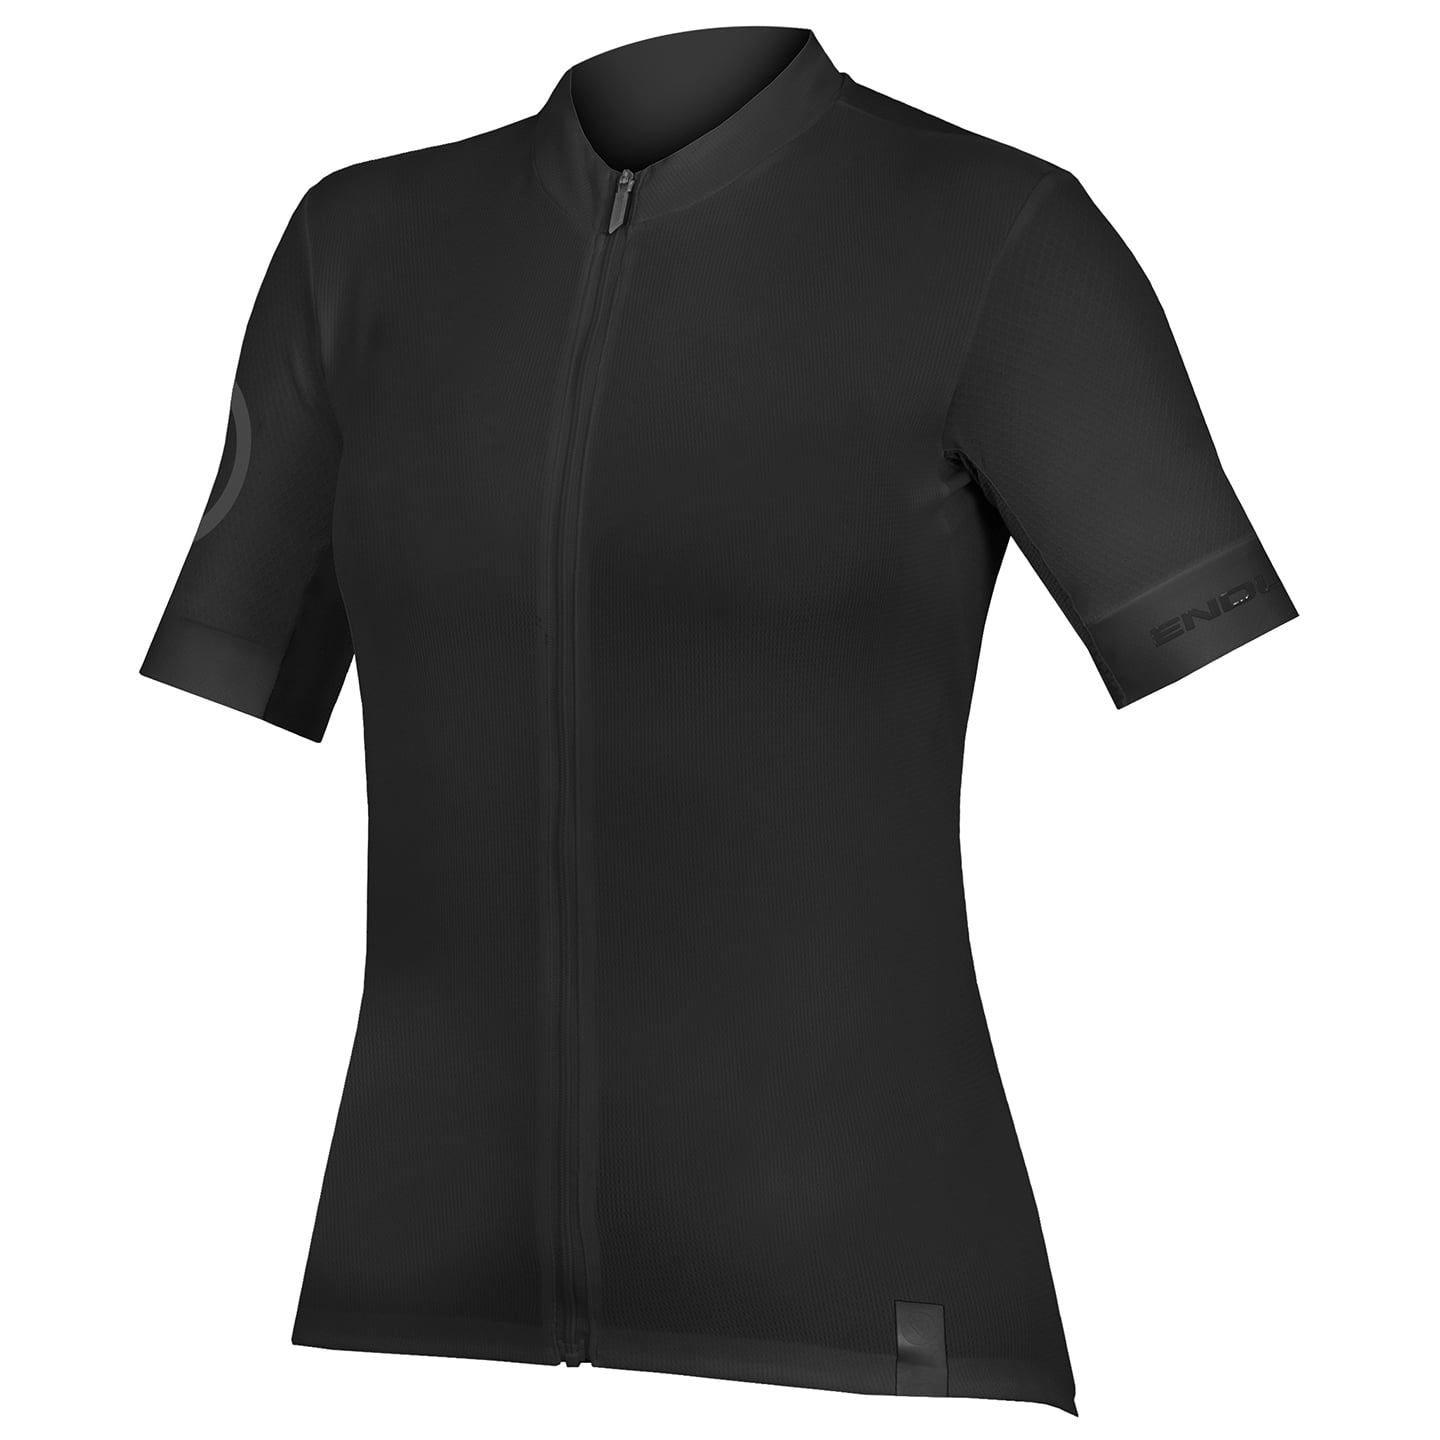 ENDURA FS260 Women’s Jersey Women’s Short Sleeve Jersey, size M, Cycling jersey, Cycle clothing